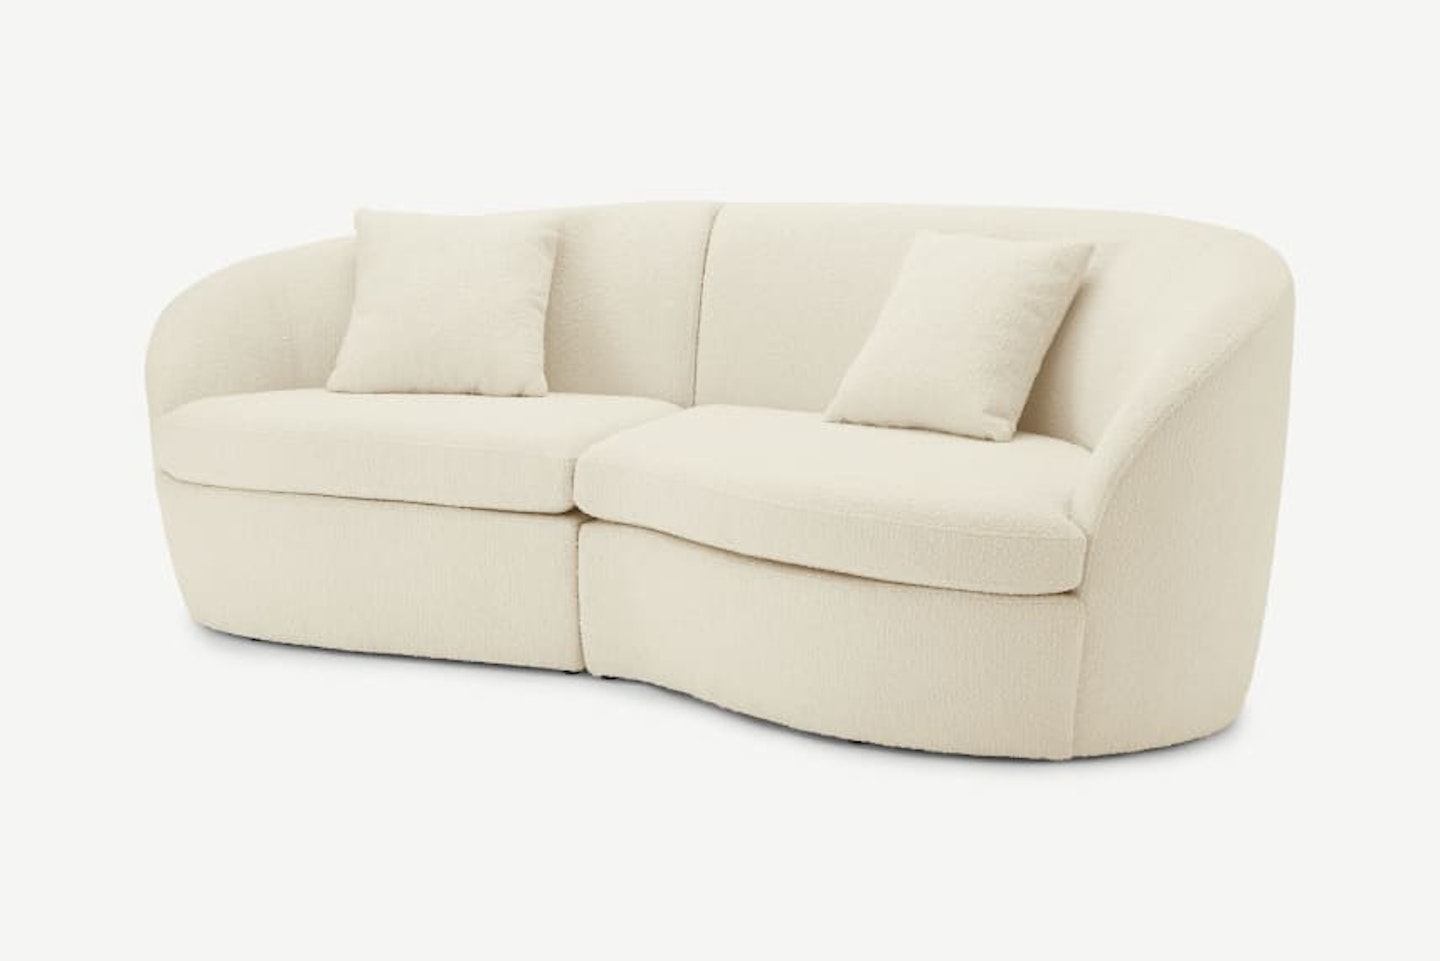 MADE, Reisa 3 Seater Sofa, Whitewash Boucle, £1,250